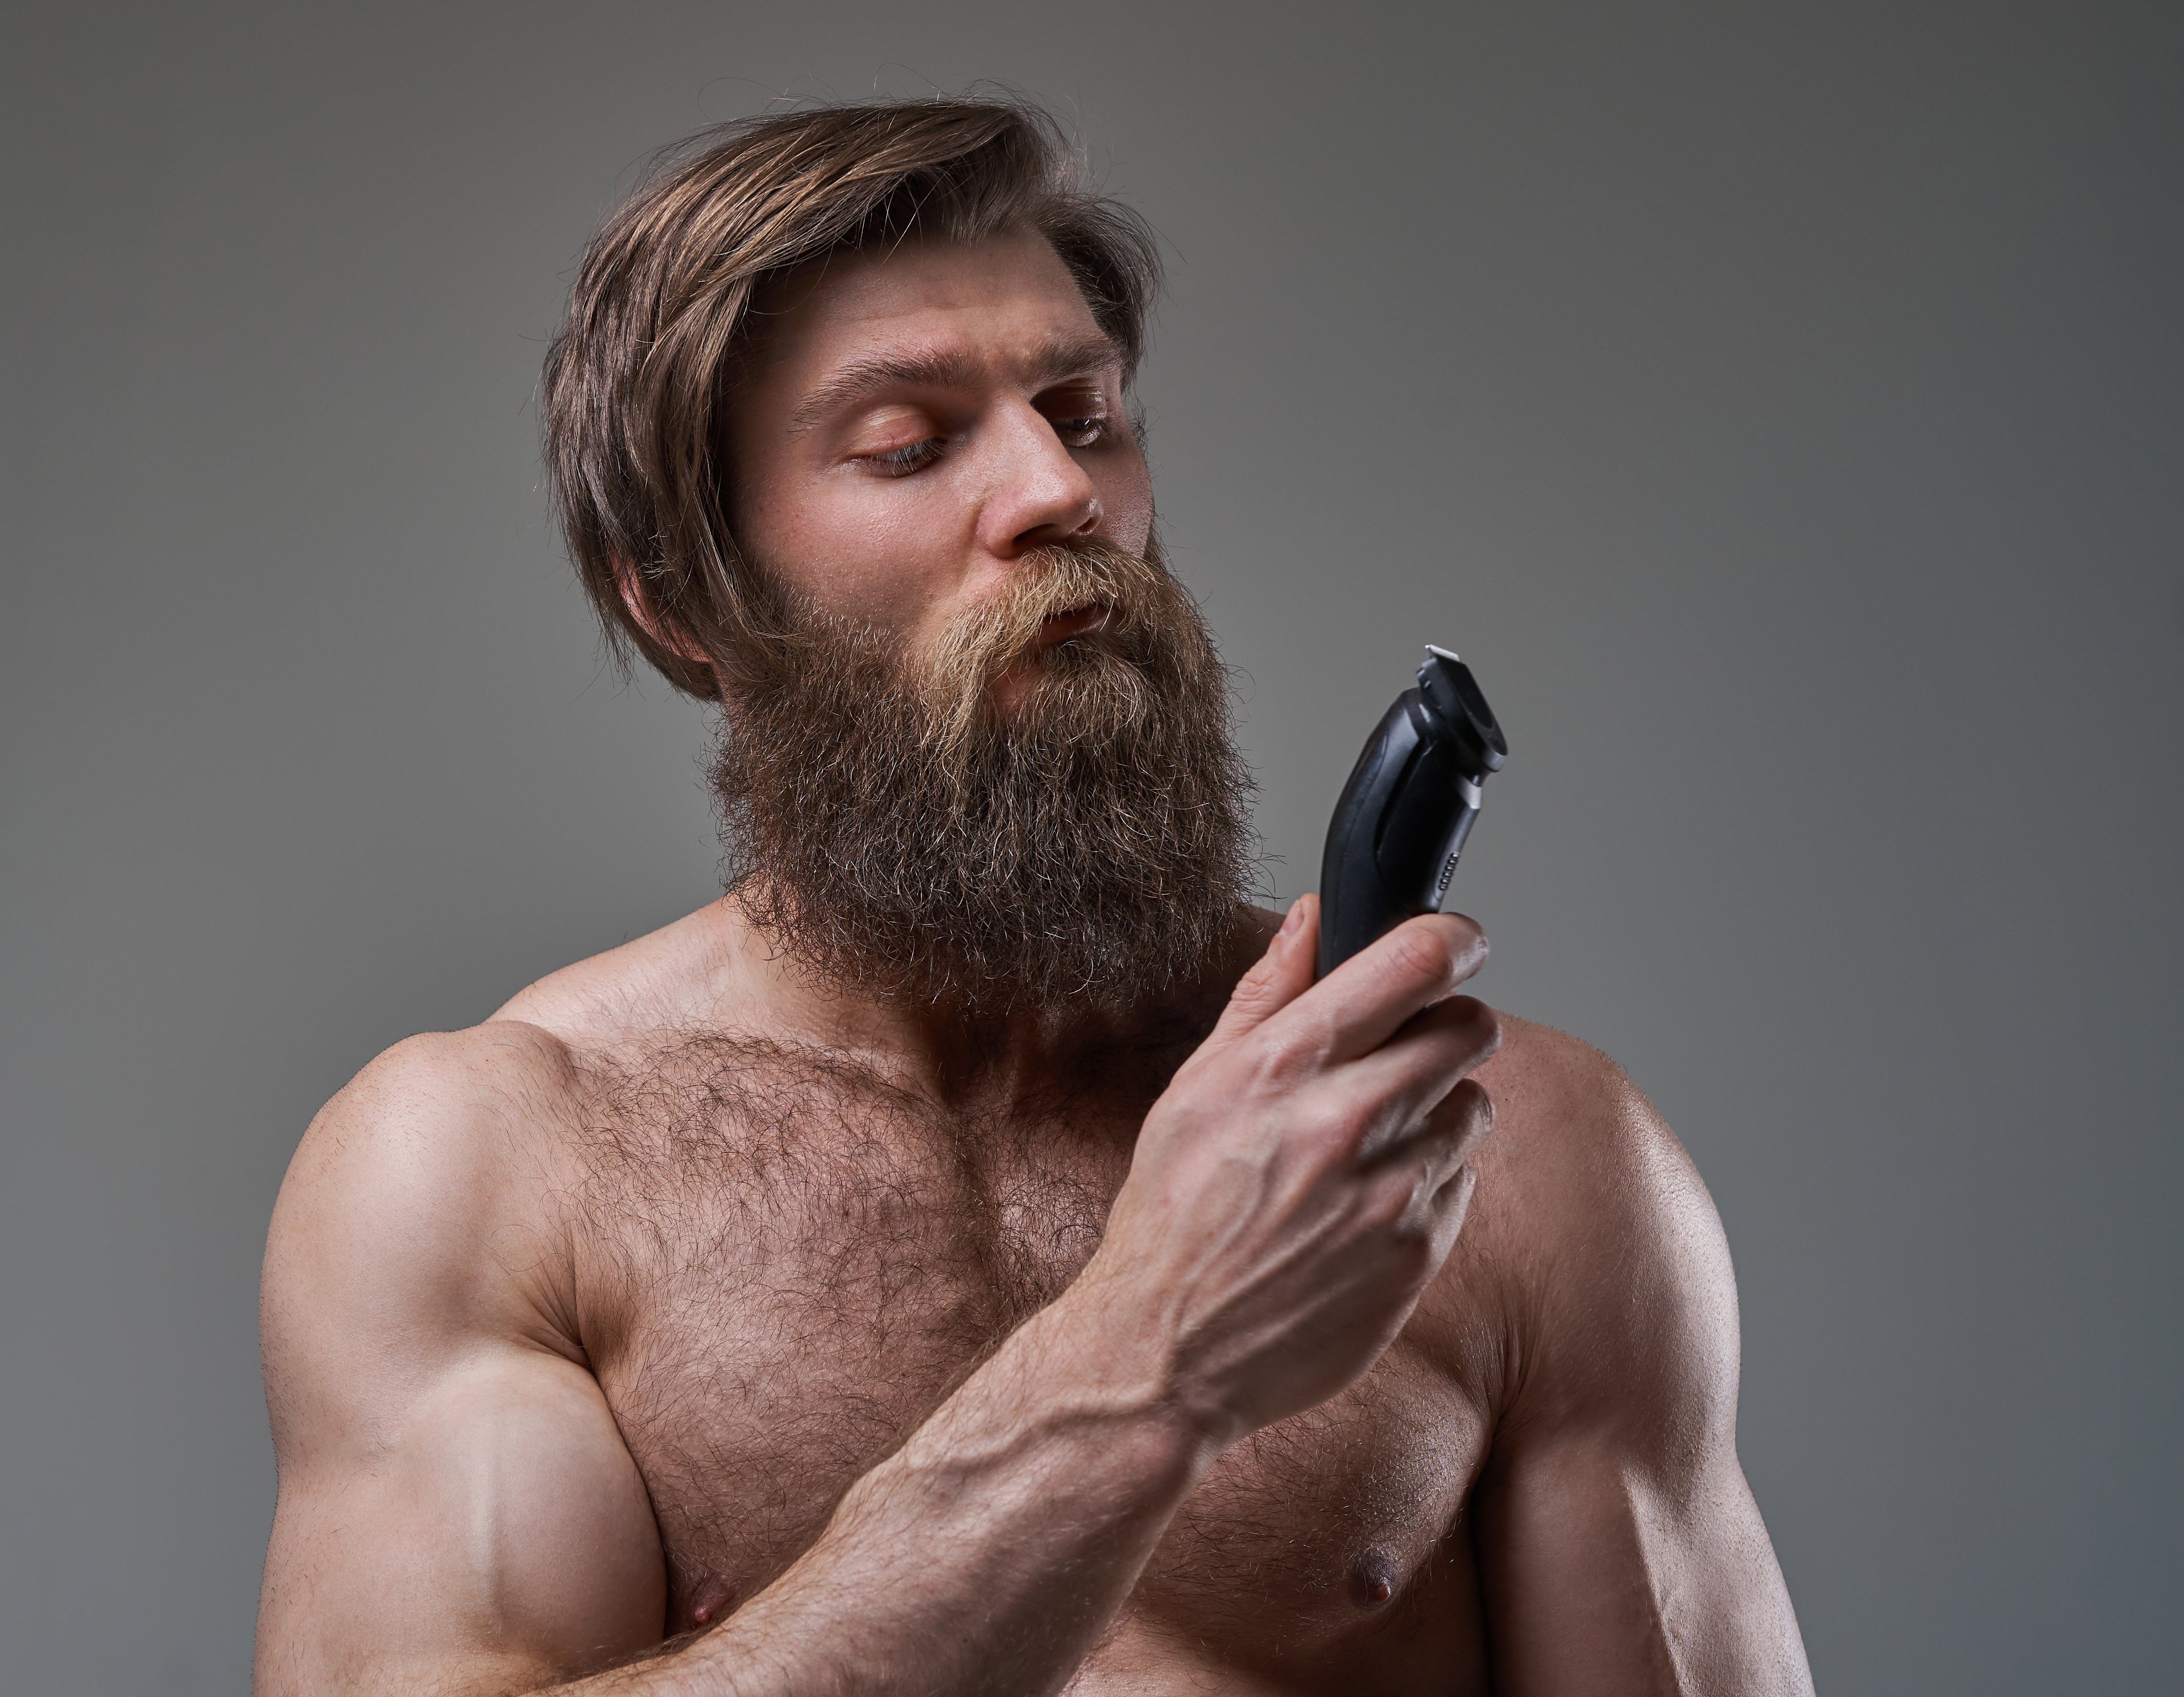 Stonejaw beard co. Expert beard growth tips: Solution to a patchy beard photo